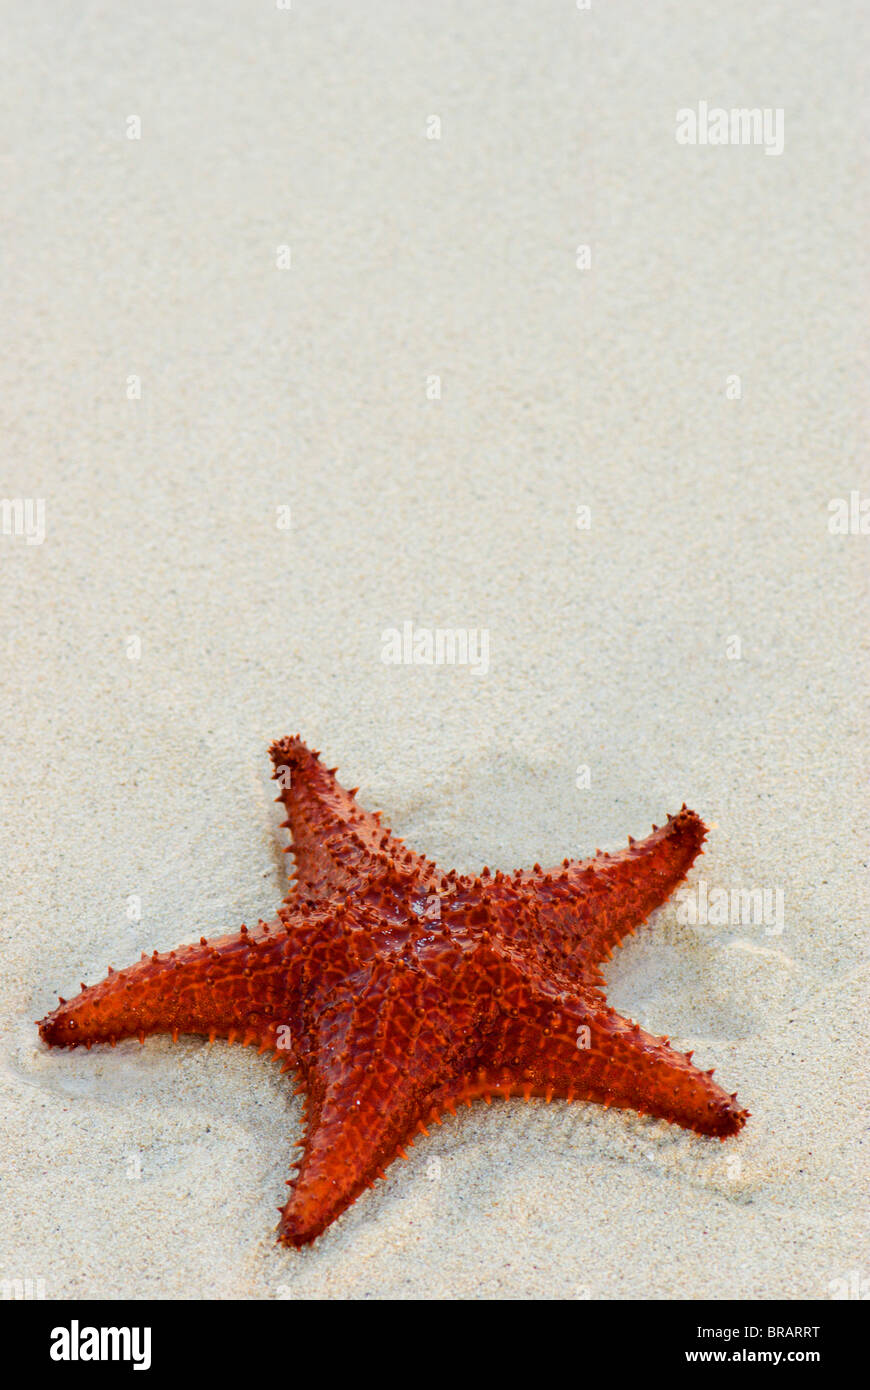 Starfish against a plain white background Stock Photo